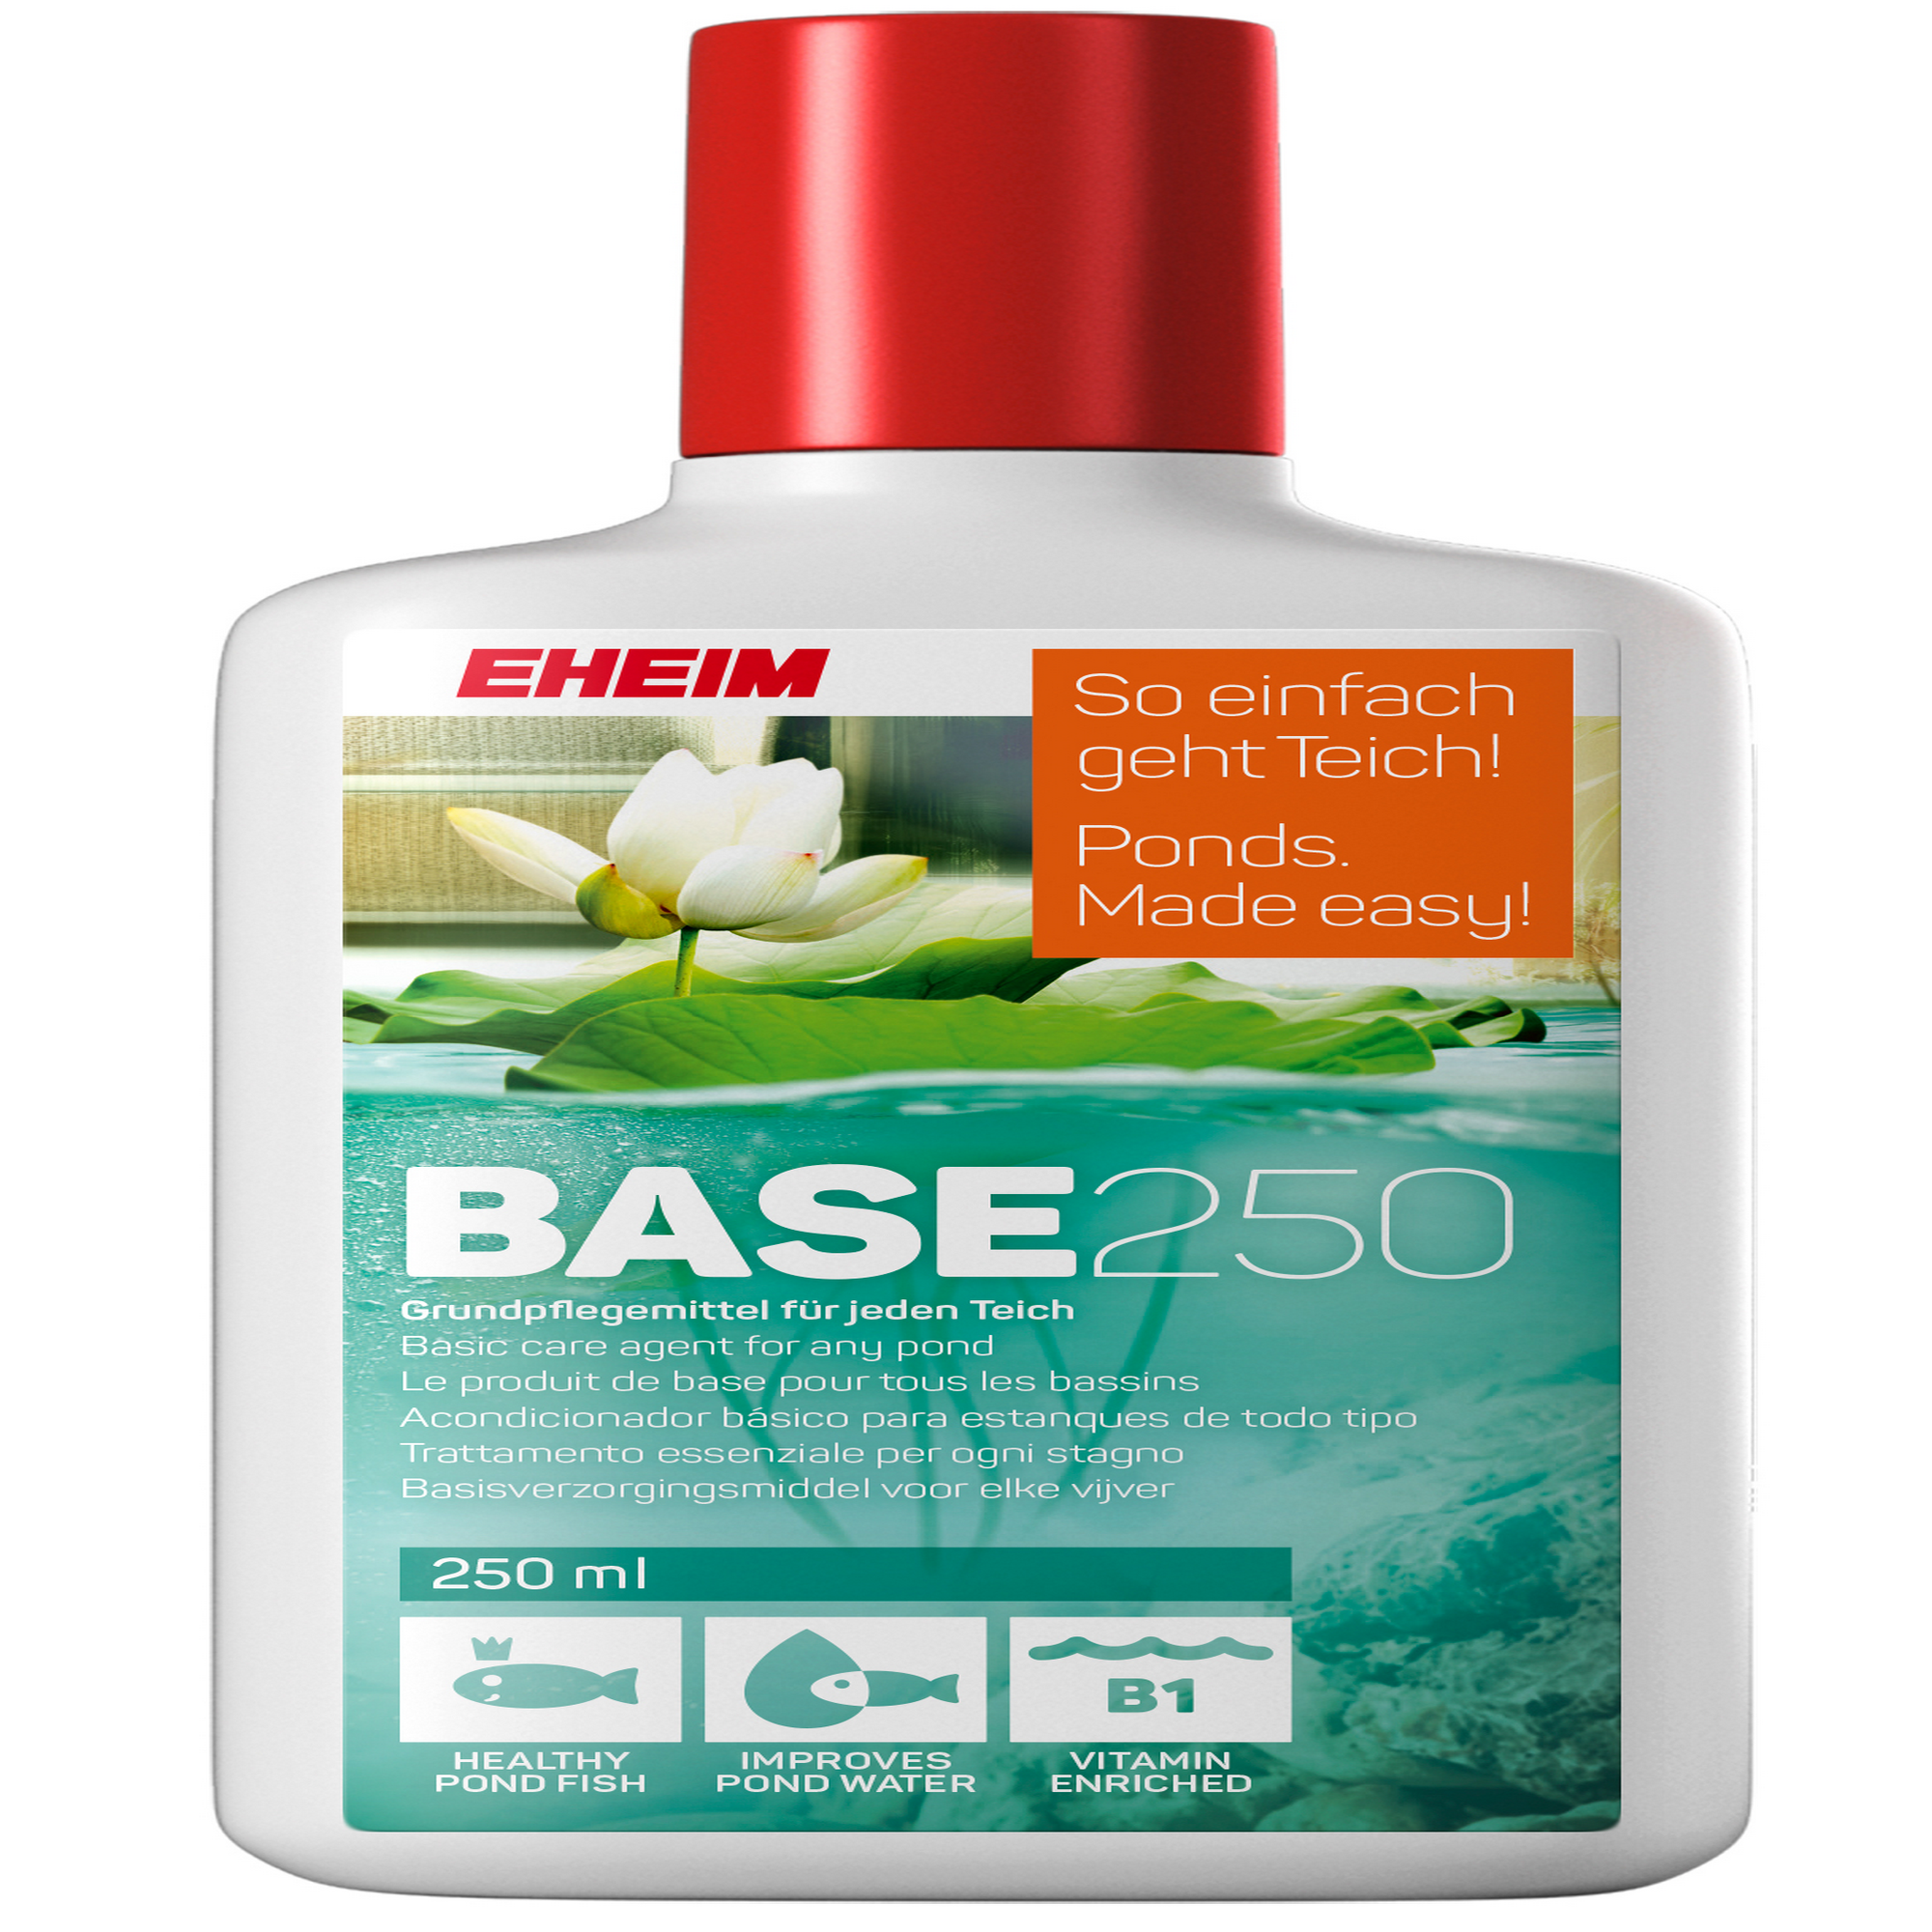 Eheim BASE 250 Grundpflege 250 ml + product picture